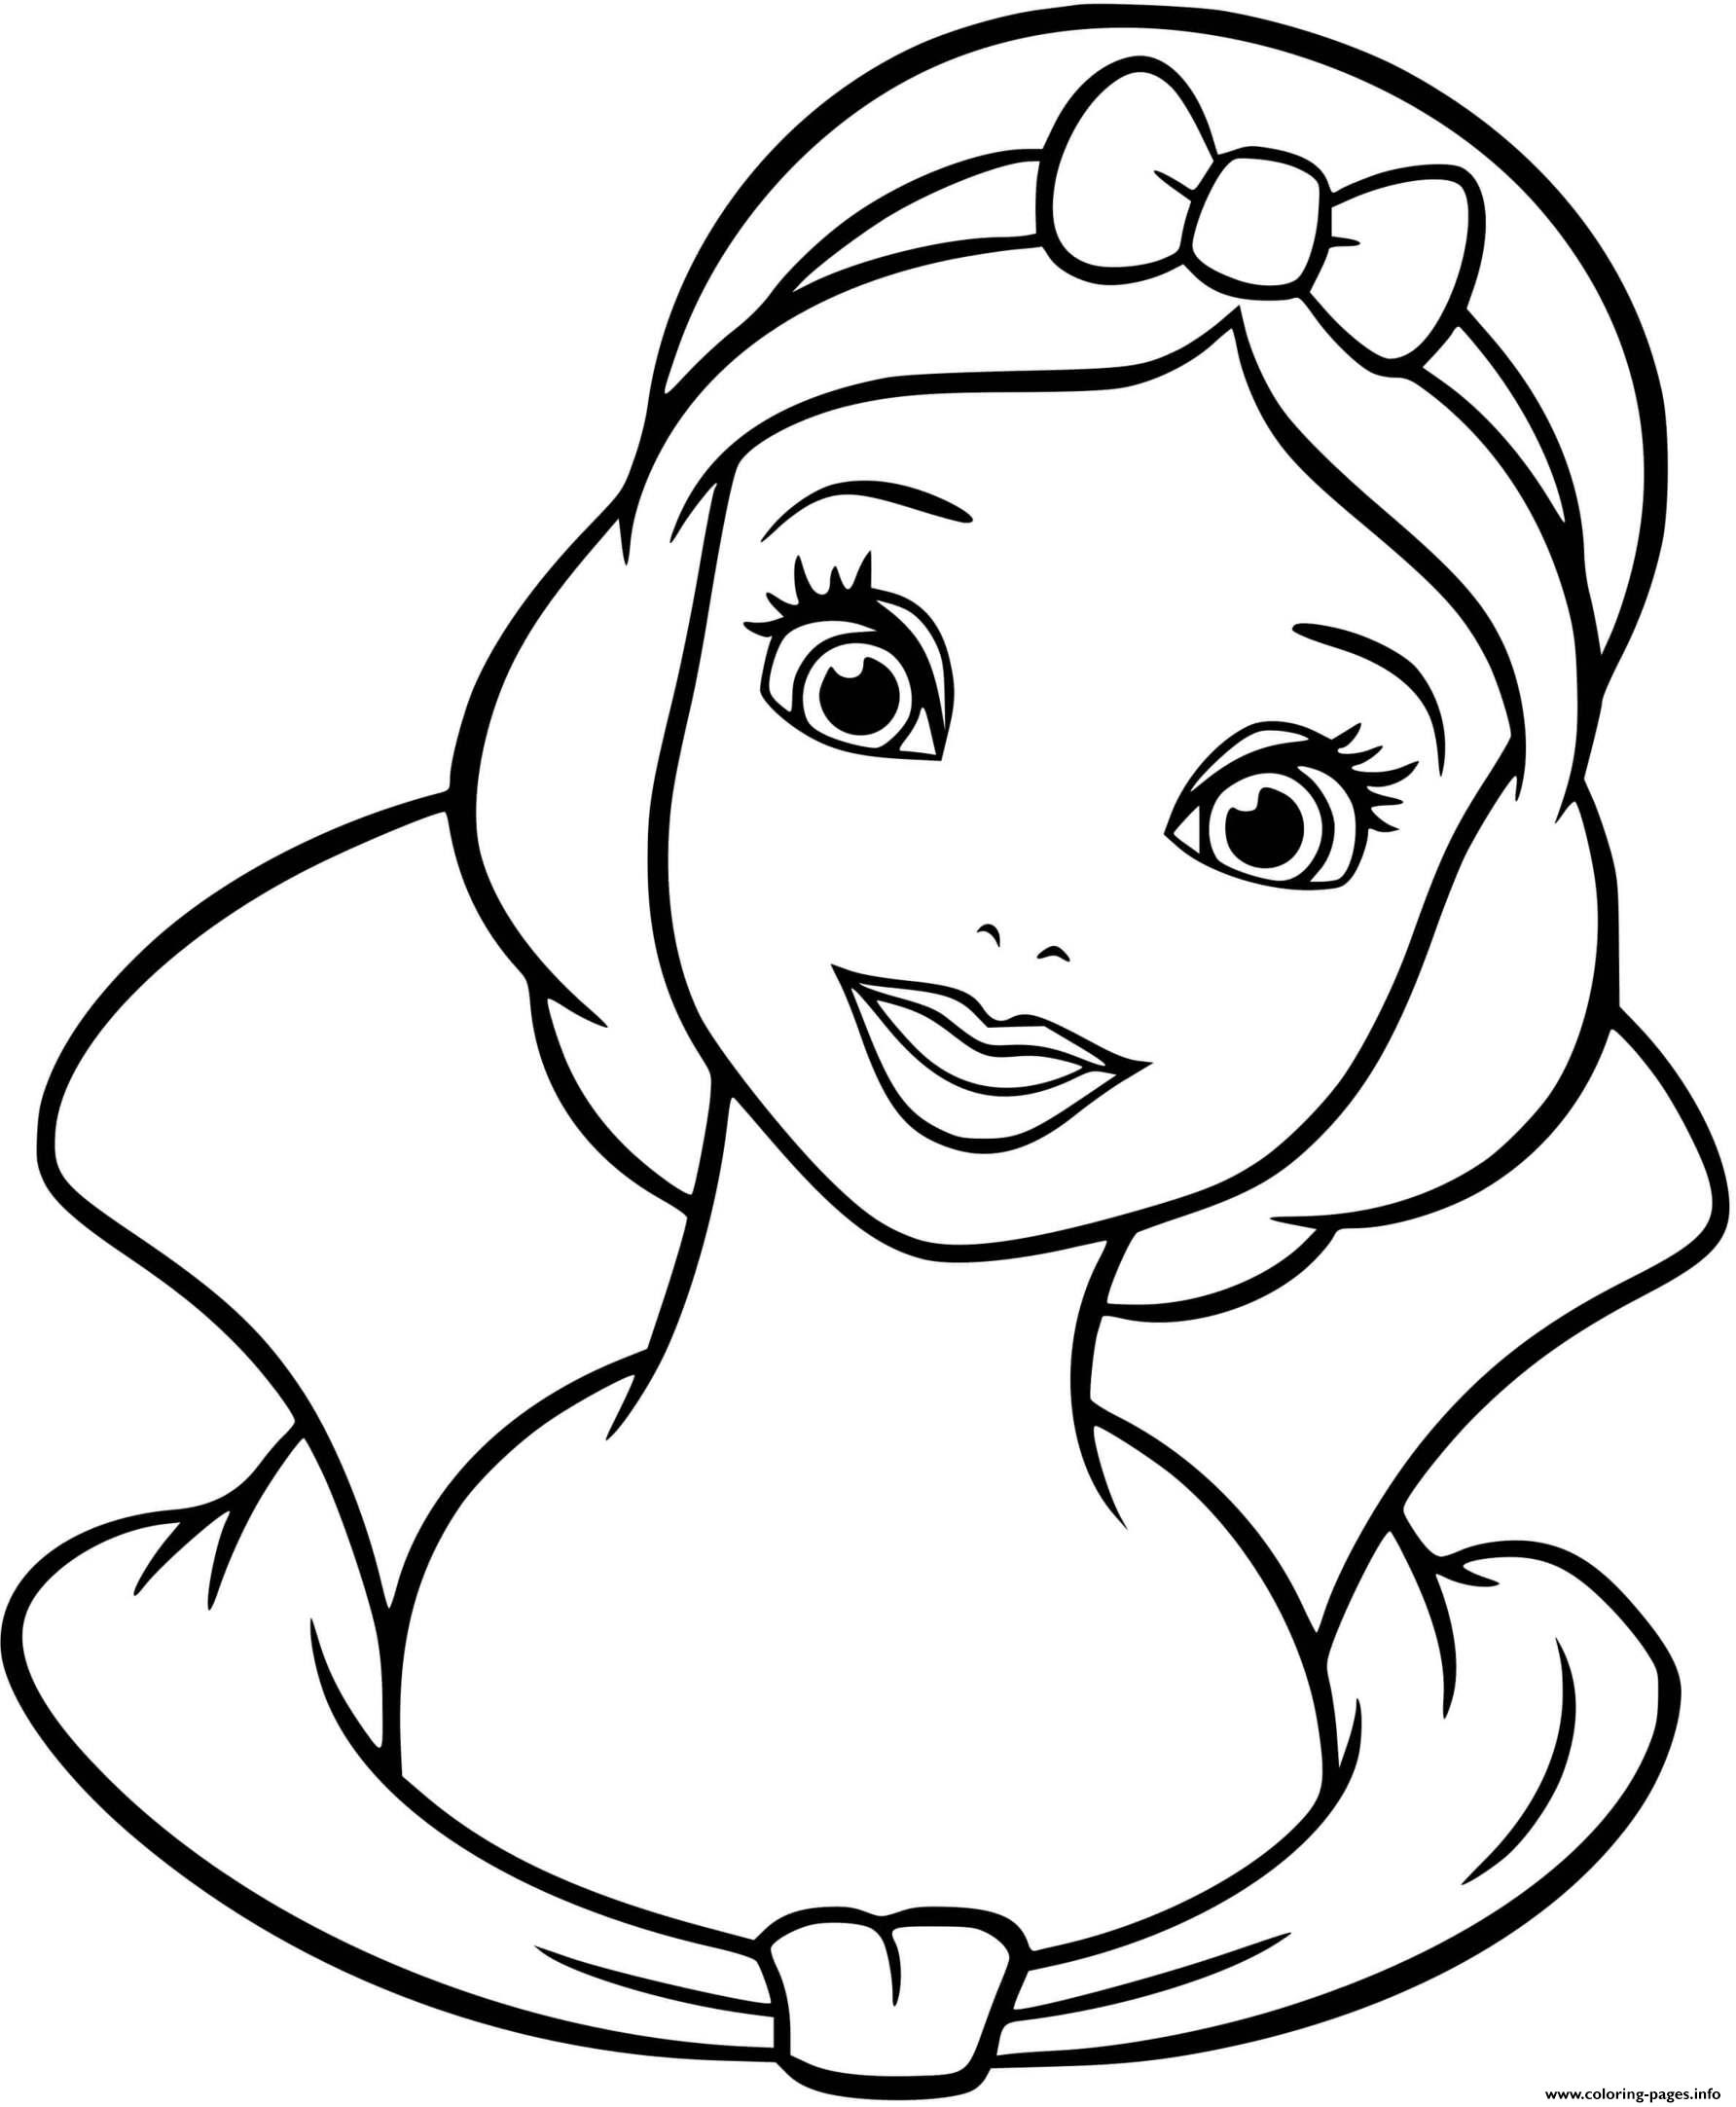 Princess Snow White coloring